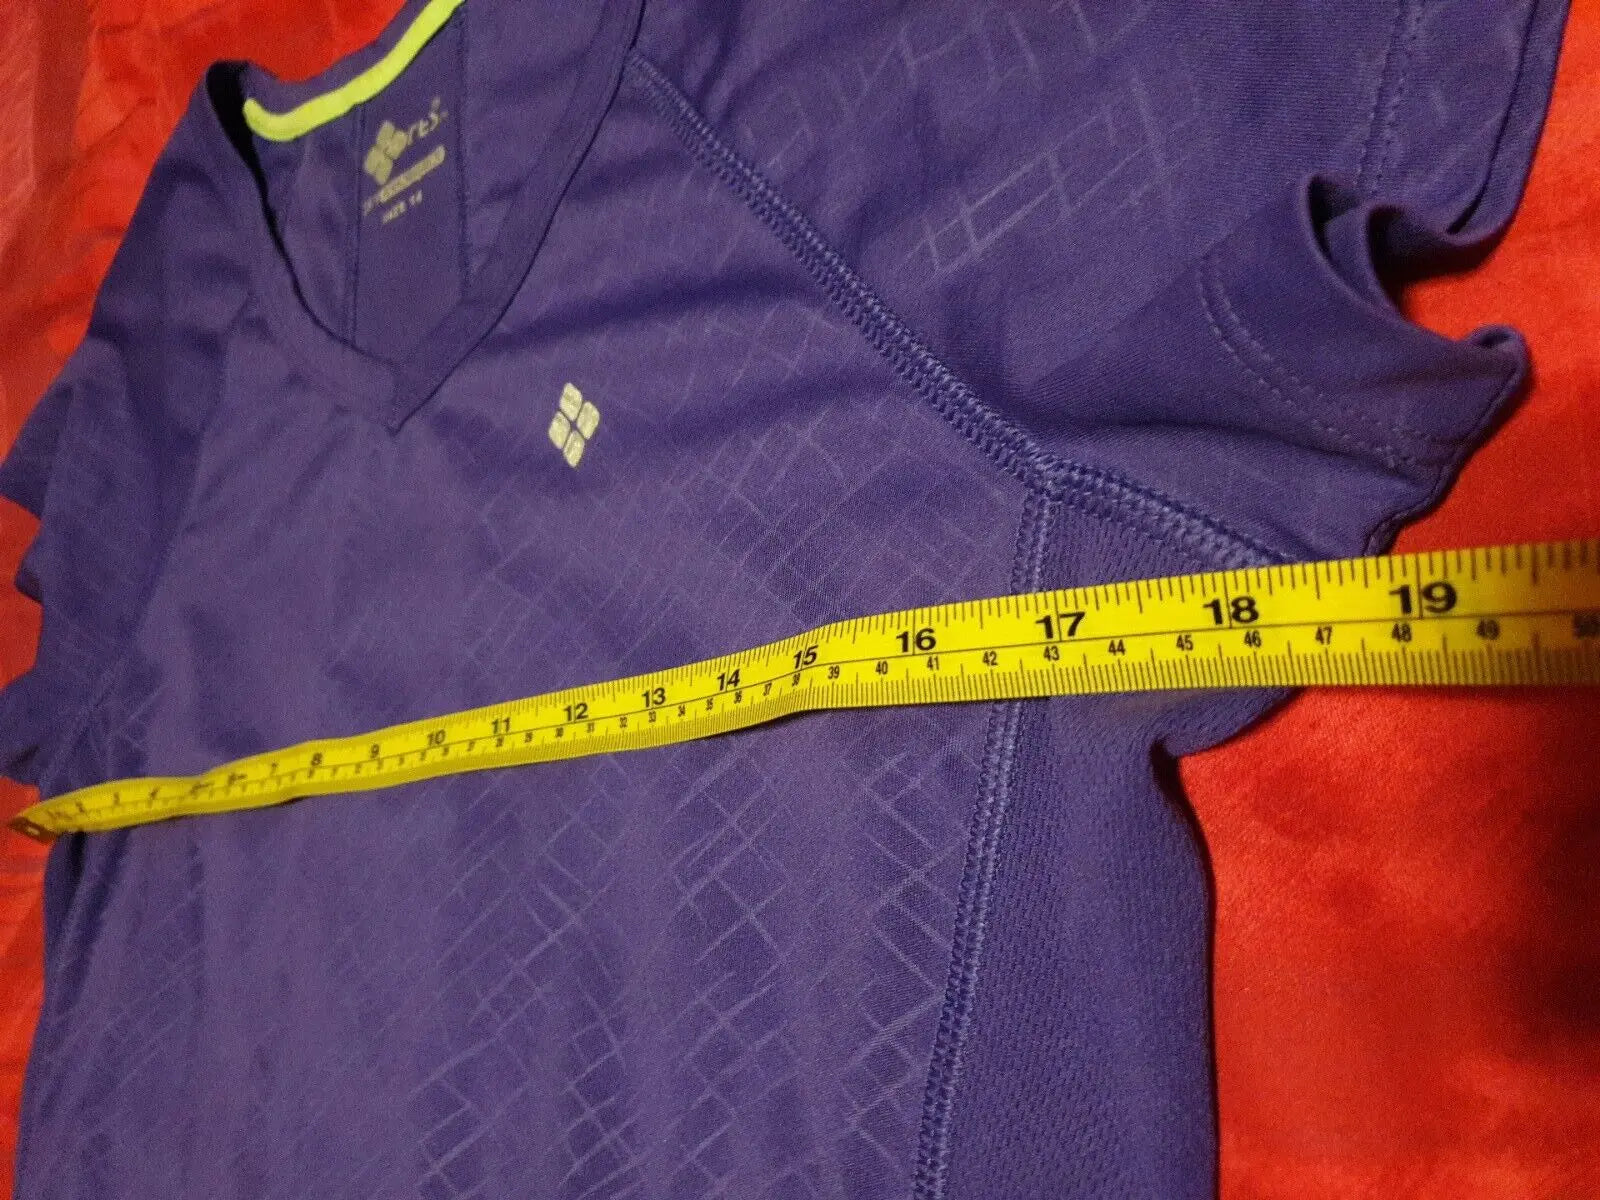 Womens sports tshirt size 14 purple dry performance top stretchy gym 226 - Image #4